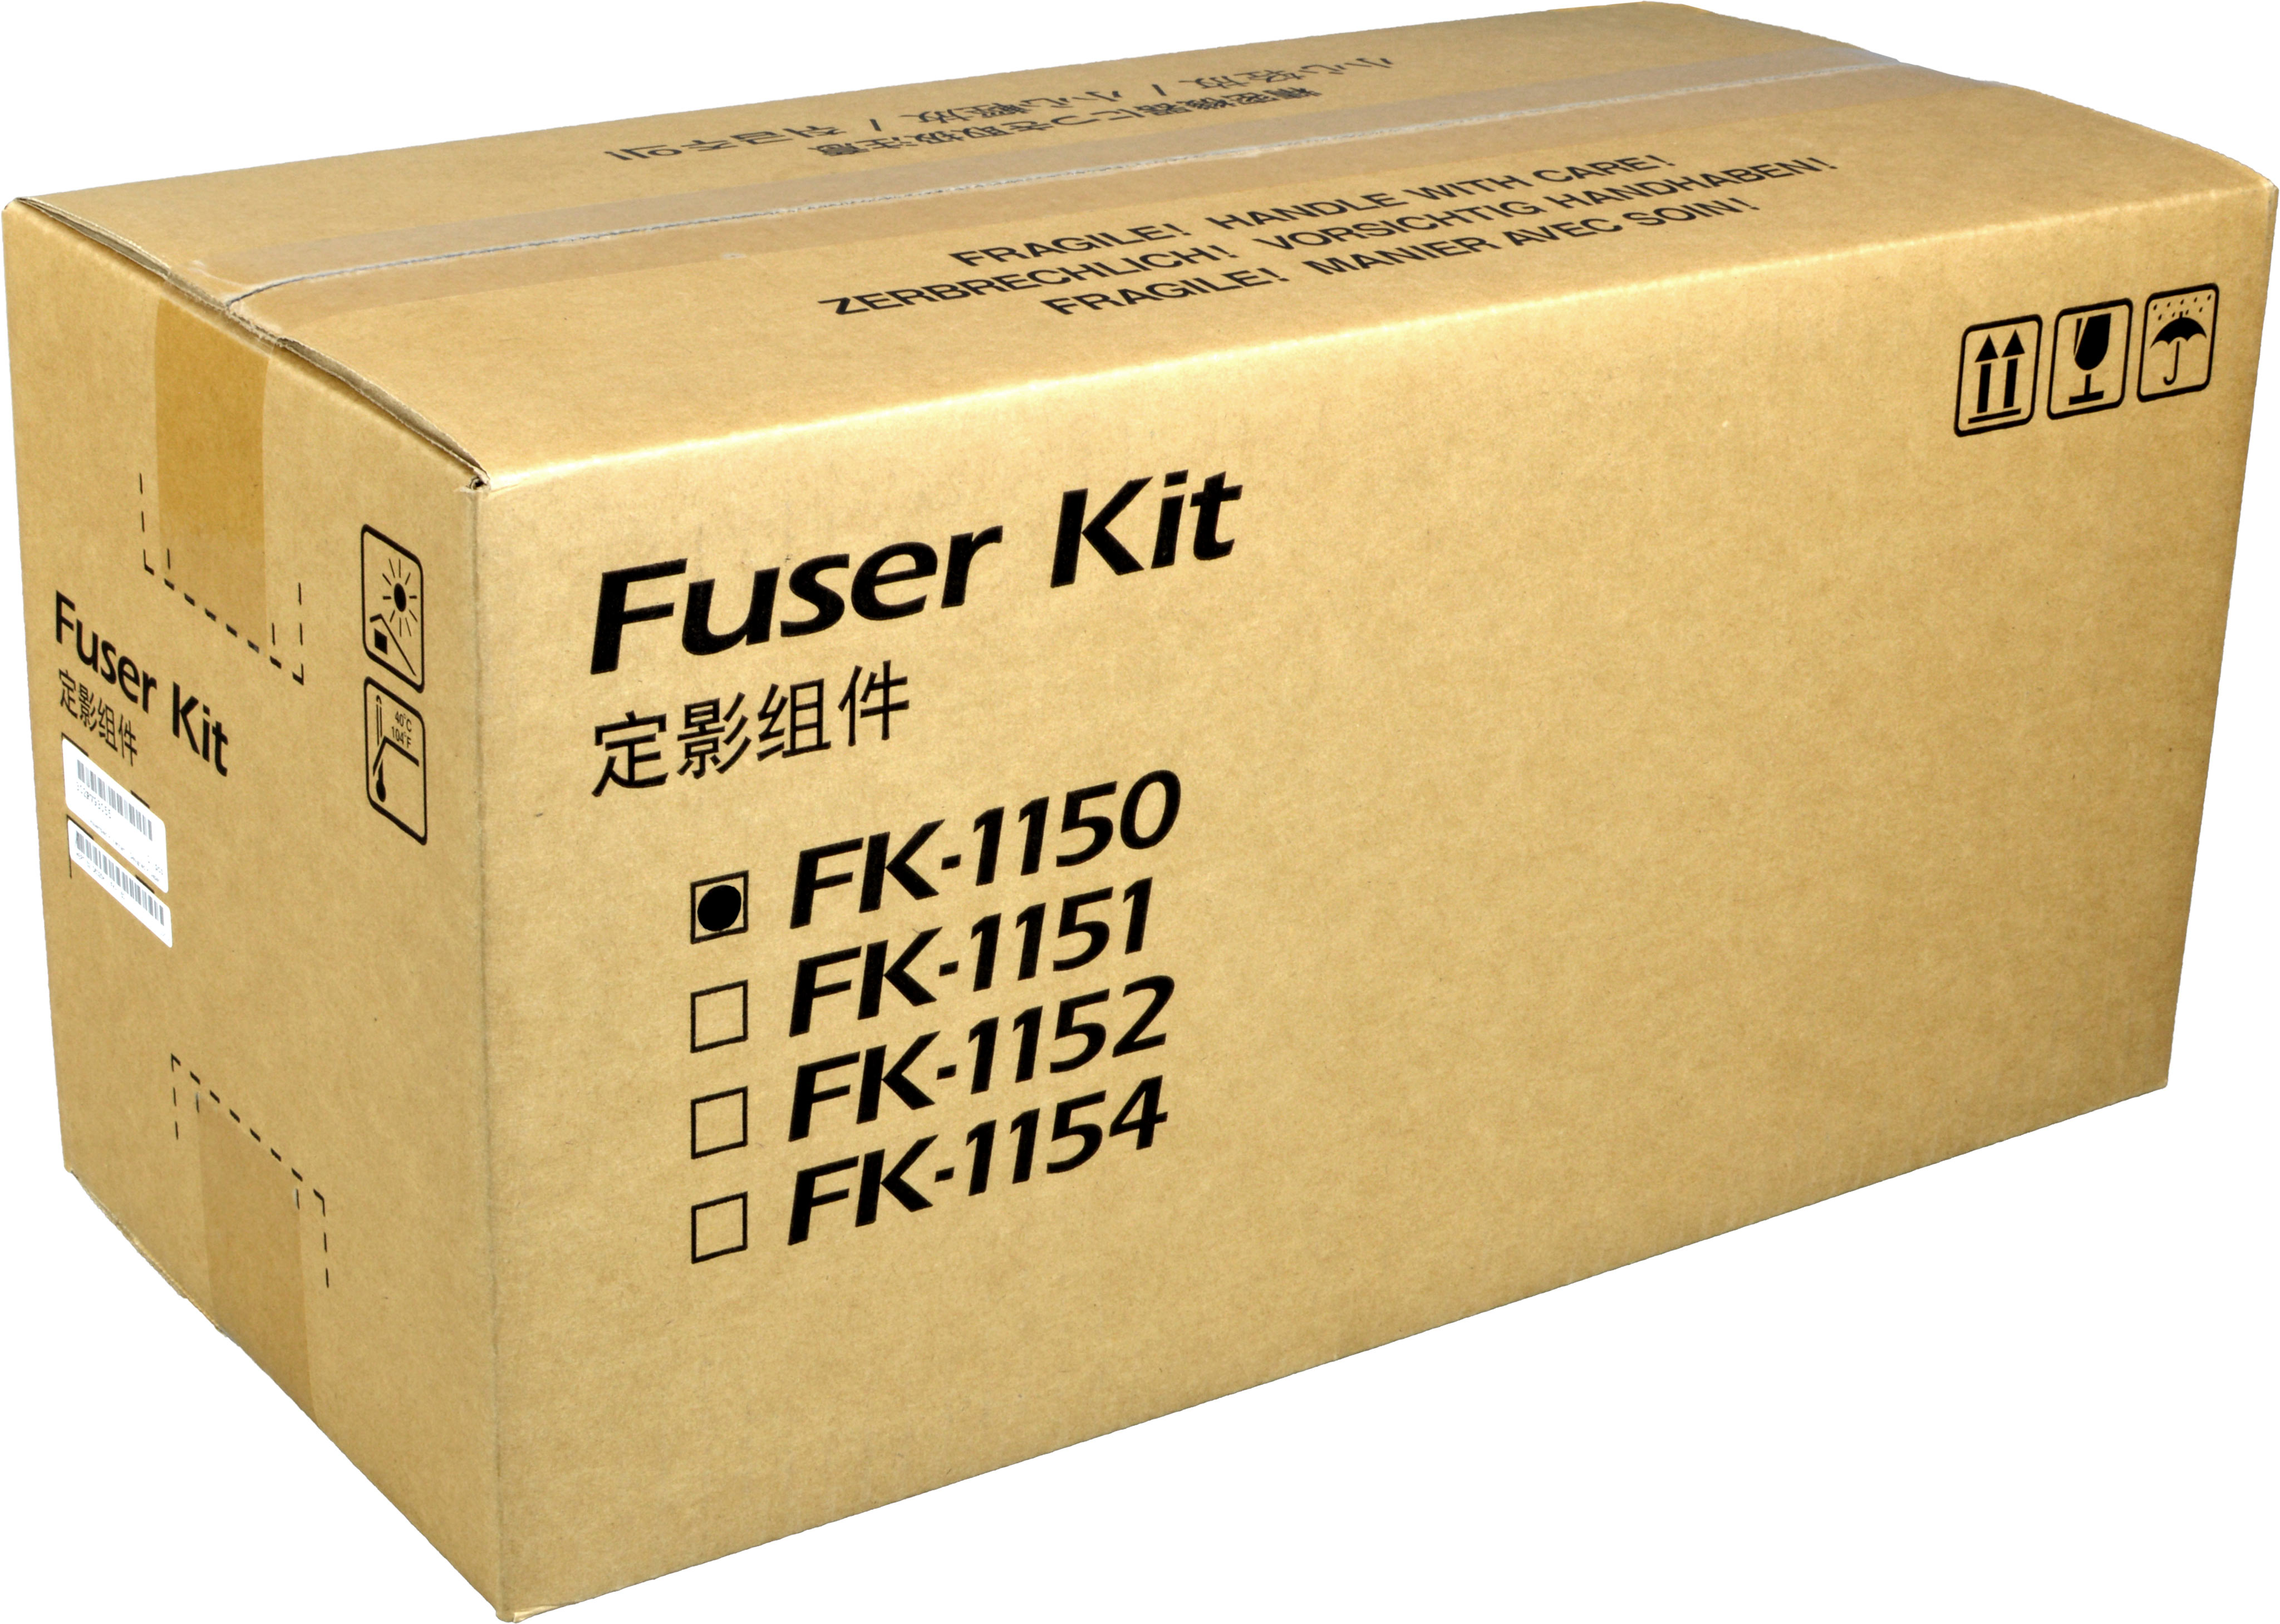 Kyocera Fuserkit FK-1150  302RV93055